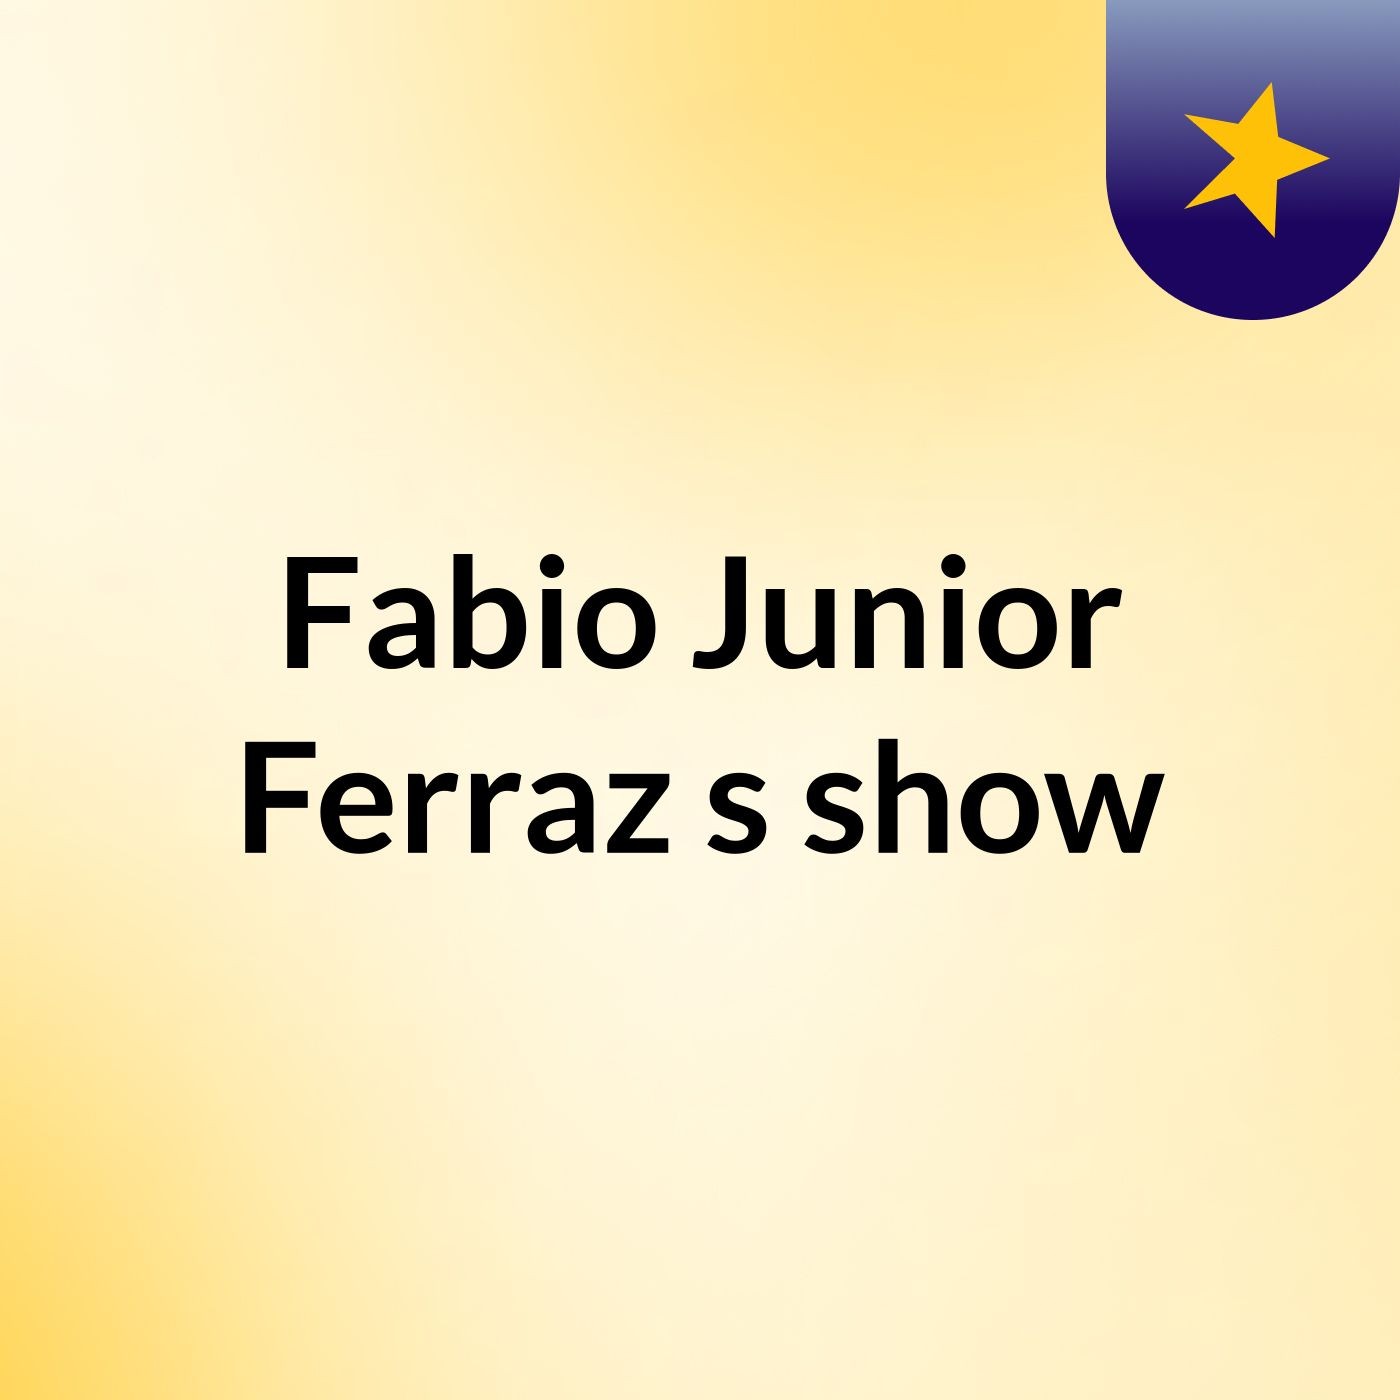 Fabio Junior Ferraz's show